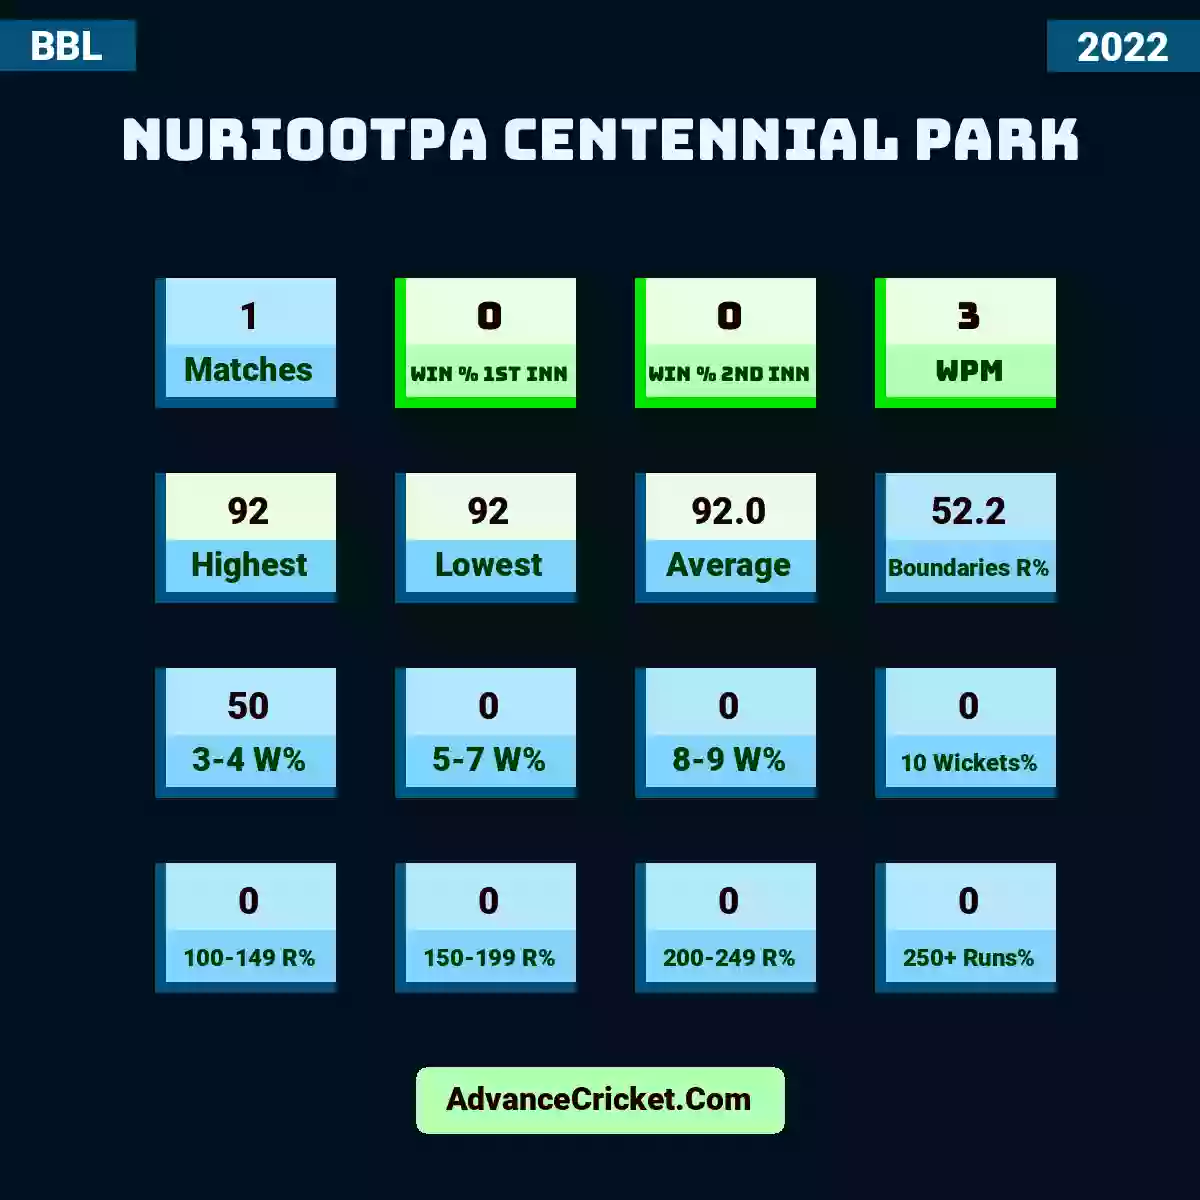 Image showing Nuriootpa Centennial Park with Matches: 1, Win % 1st Inn: 0, Win % 2nd Inn: 0, WPM: 3, Highest: 92, Lowest: 92, Average: 92.0, Boundaries R%: 52.2, 3-4 W%: 50, 5-7 W%: 0, 8-9 W%: 0, 10 Wickets%: 0, 100-149 R%: 0, 150-199 R%: 0, 200-249 R%: 0, 250+ Runs%: 0.